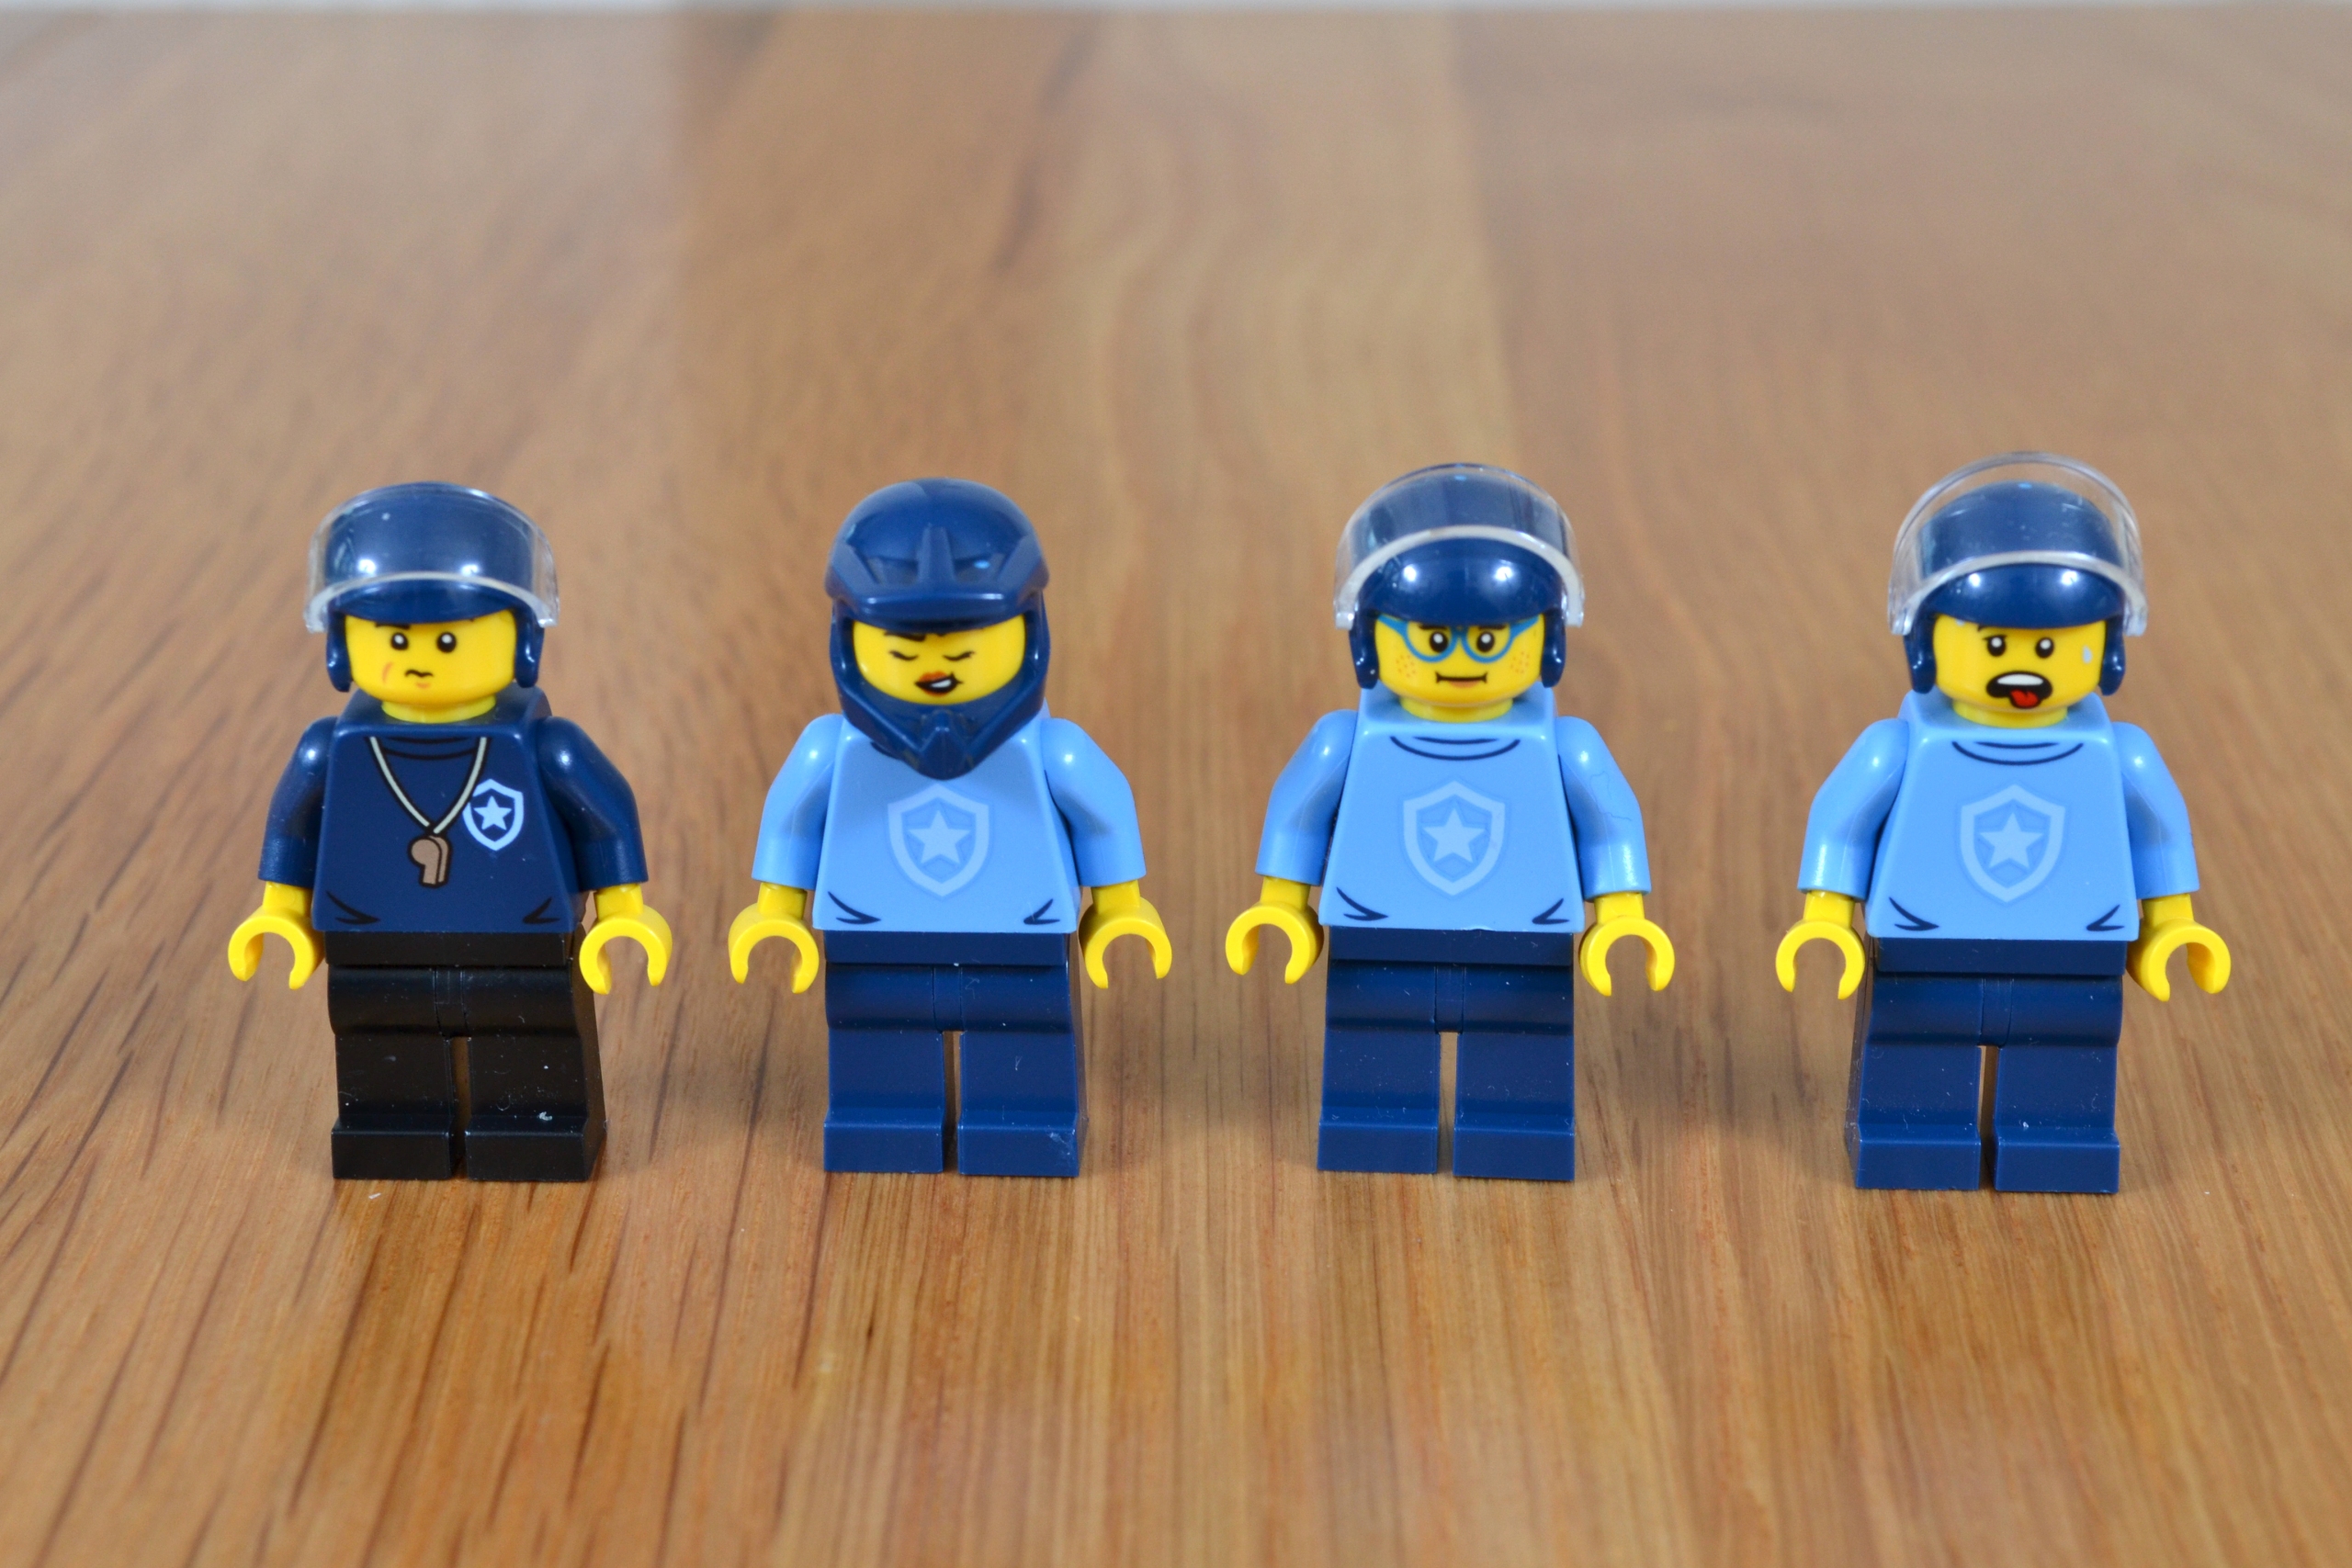 Lego City Police Training Academy 60372 Shop Now